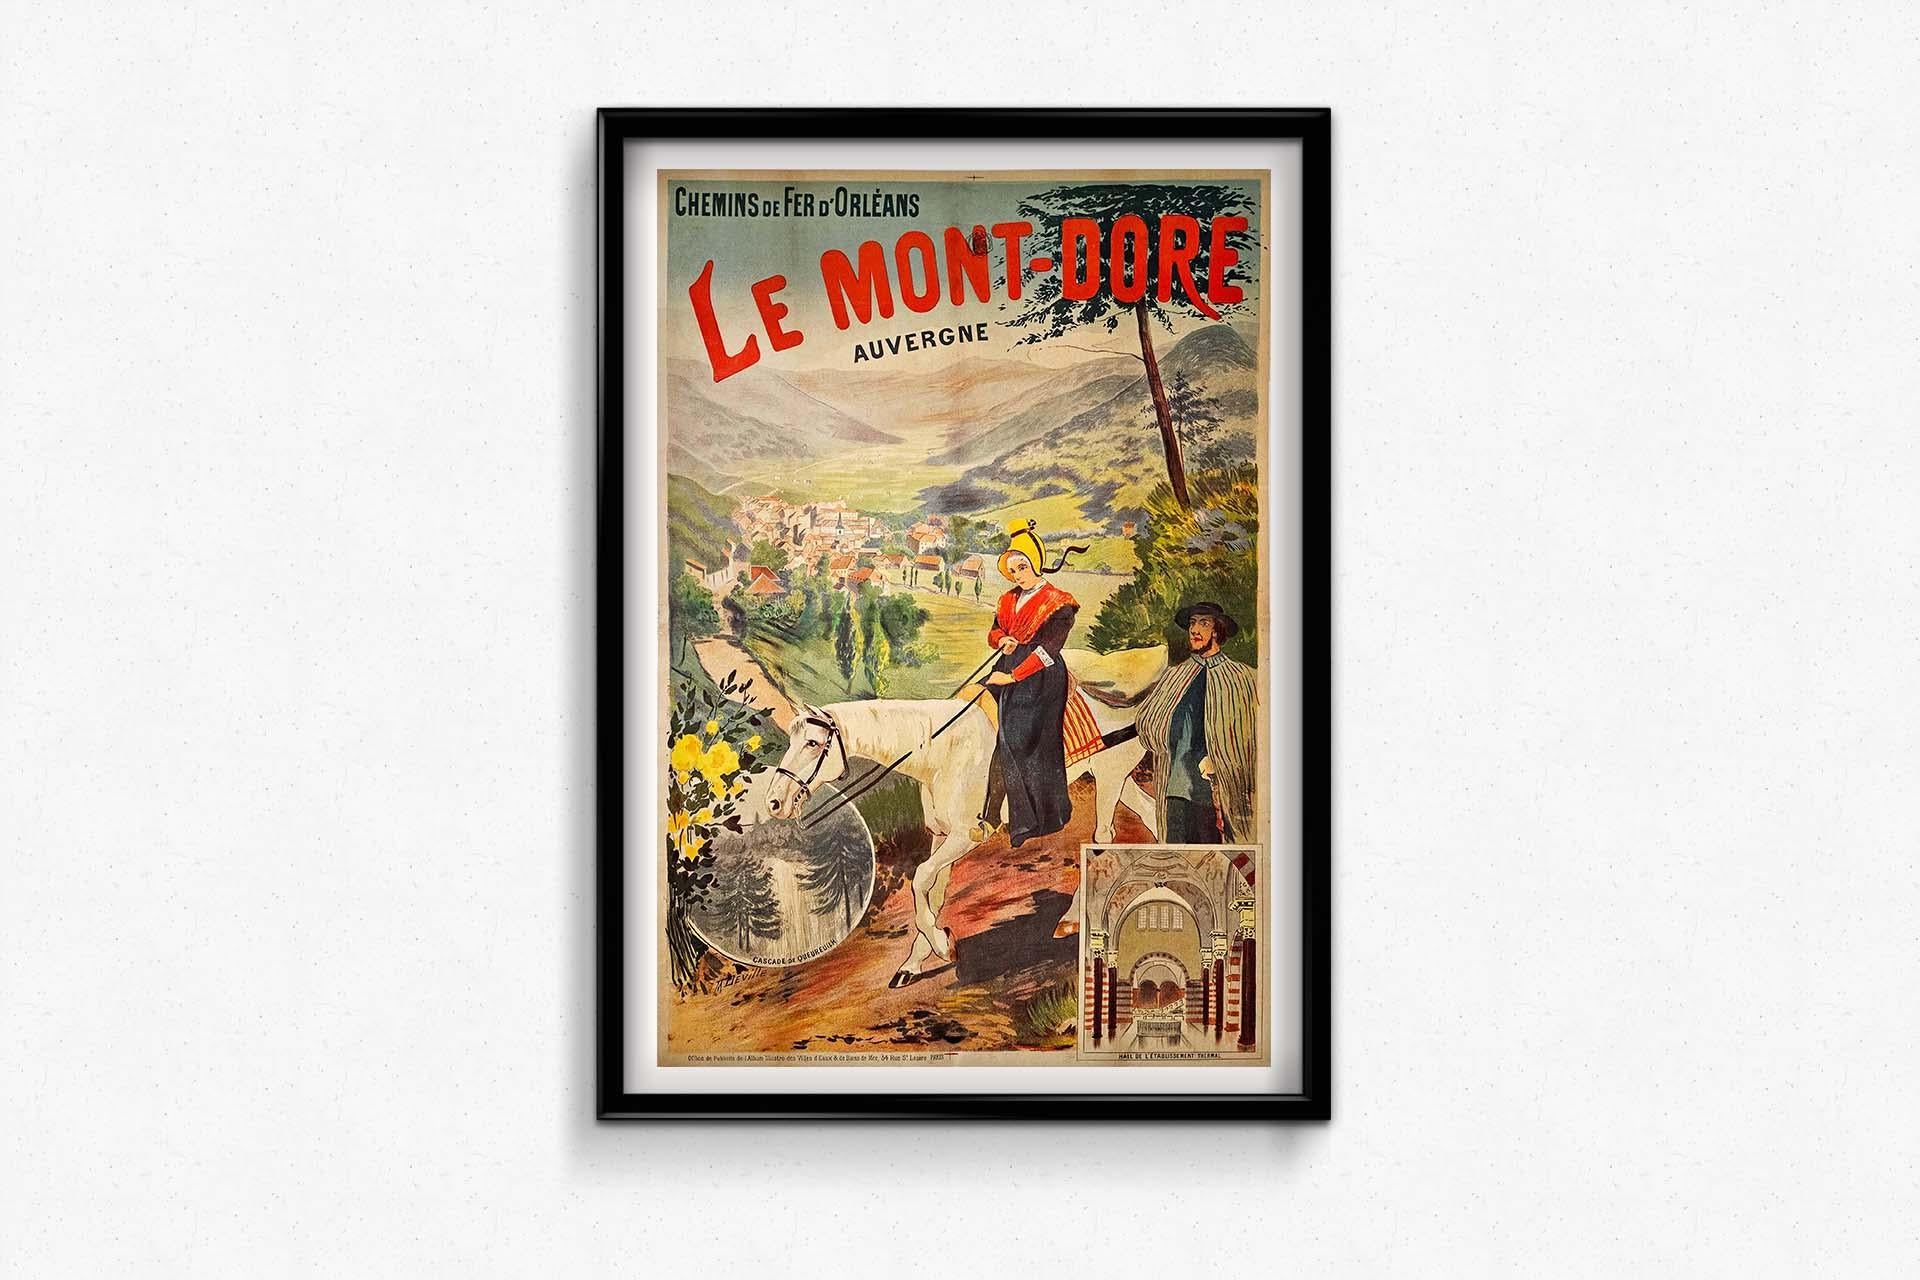 Deville's original poster for Chemins de fer d'Orléans, showcasing Le Mont-Dore in Auvergne with the captivating Cascade de Queureuilh and the grandeur of the thermal establishment, unfolds as a visual symphony, transcending the boundaries of mere